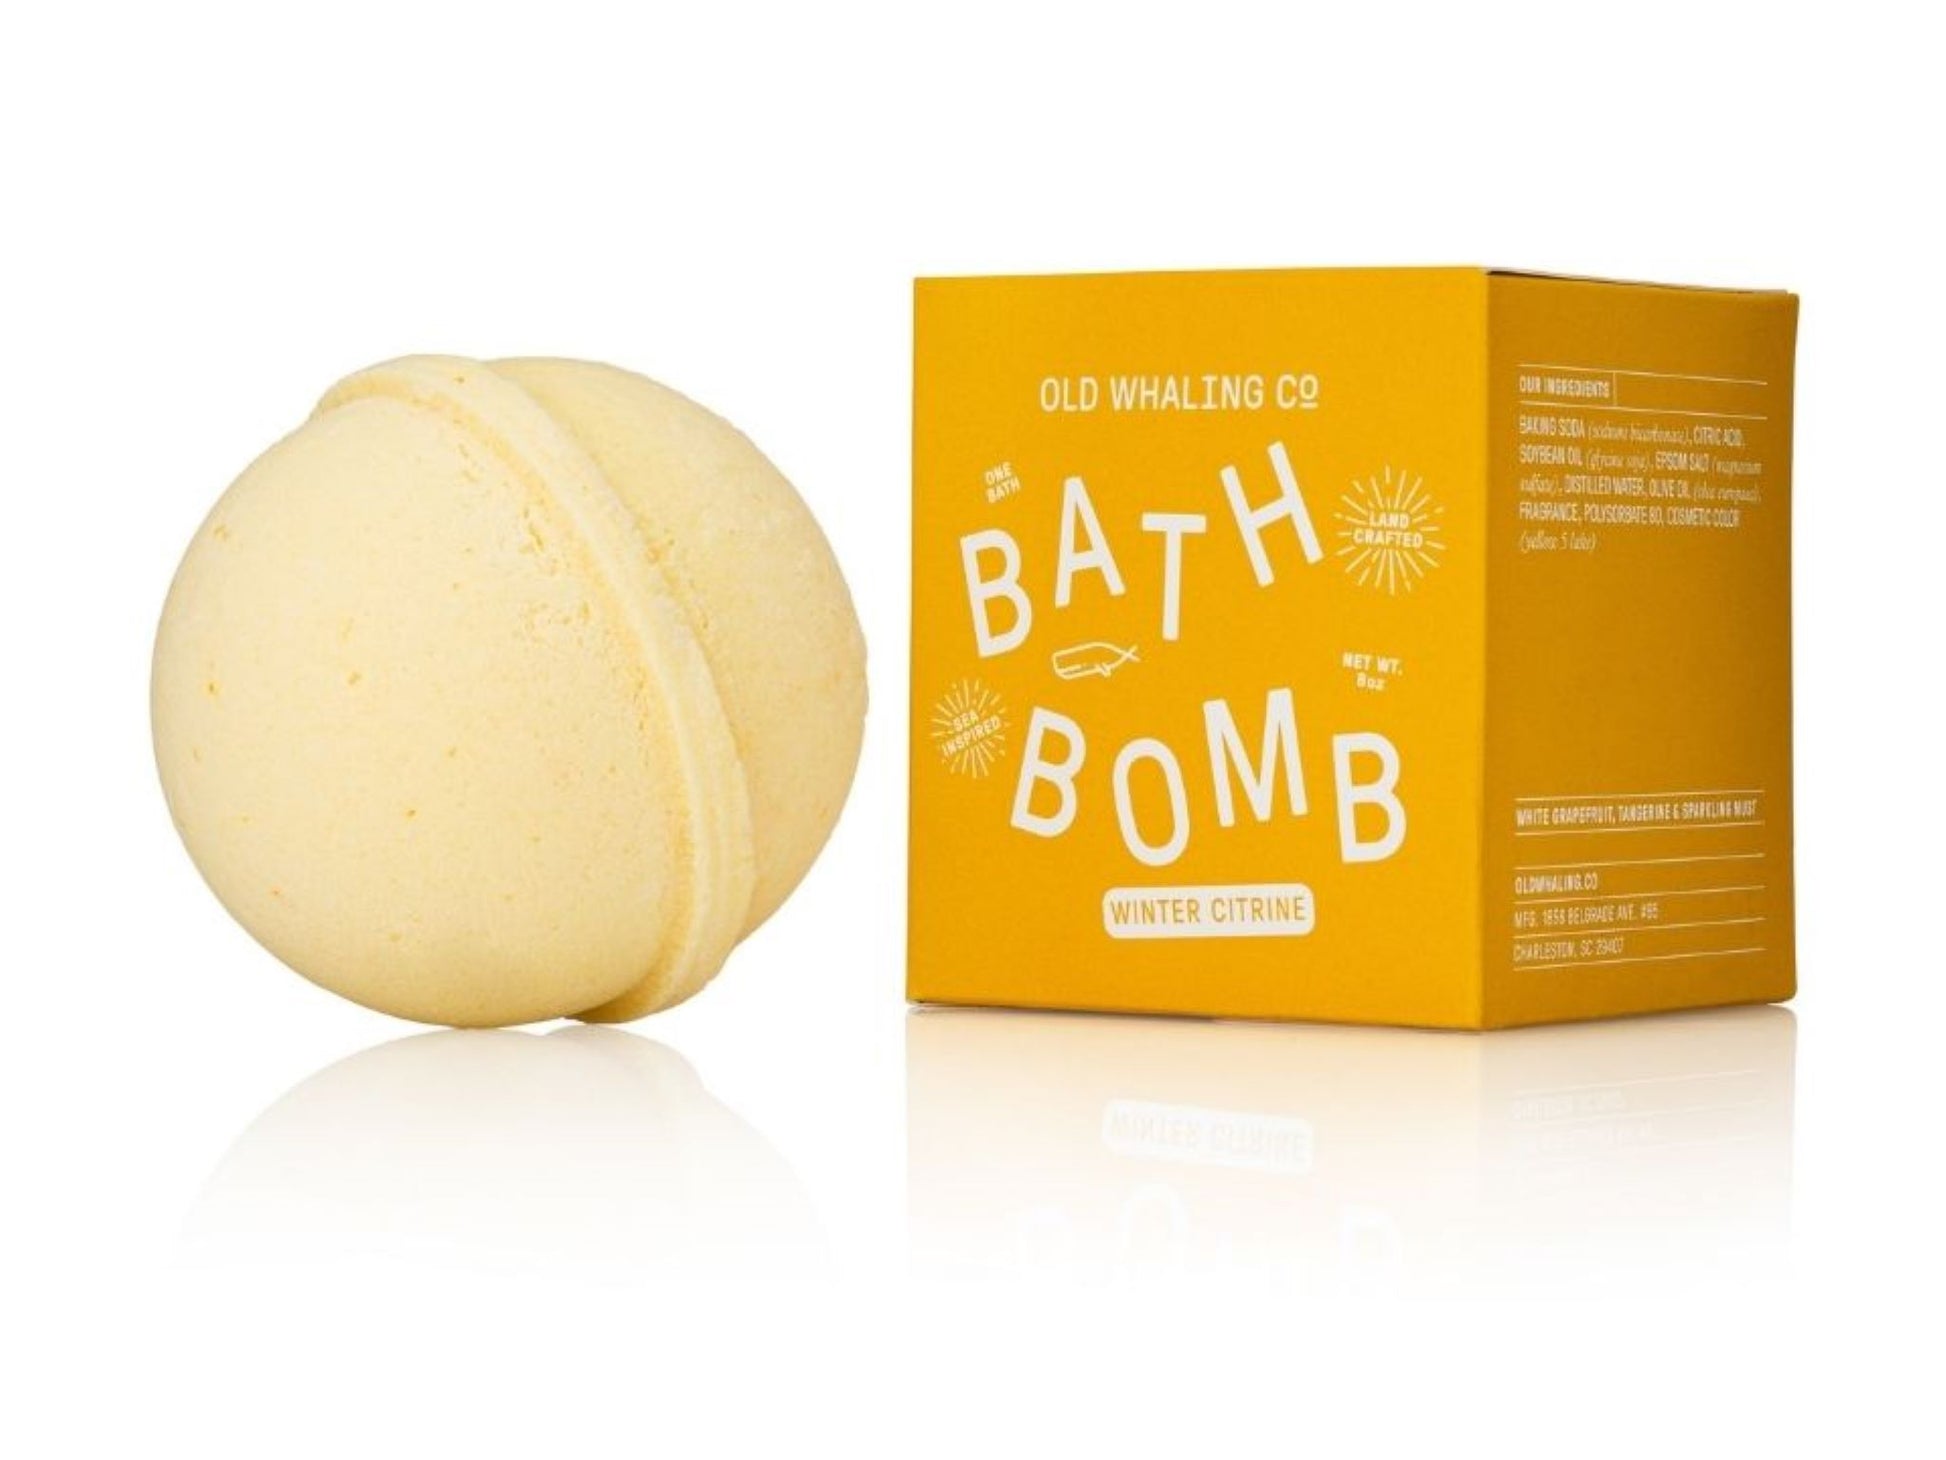 Bath Bomb winter citrine 